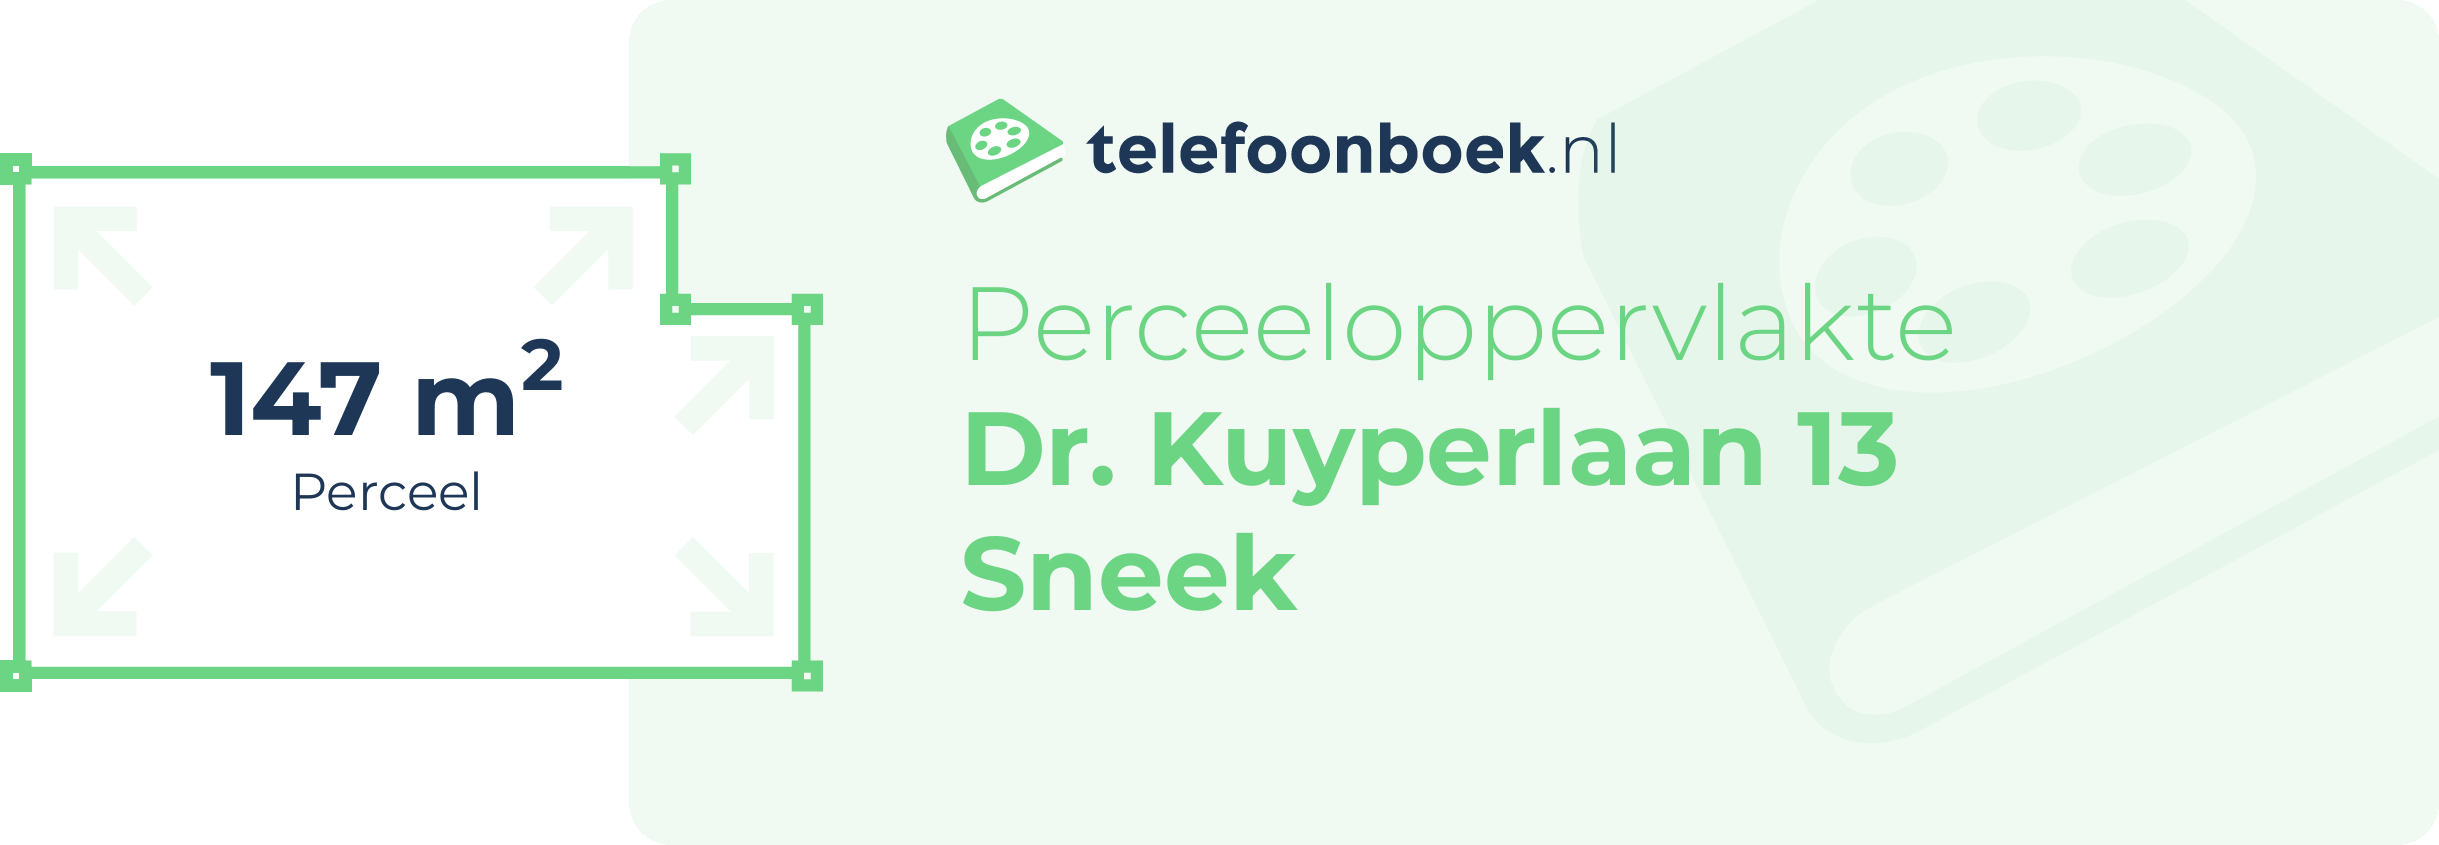 Perceeloppervlakte Dr. Kuyperlaan 13 Sneek